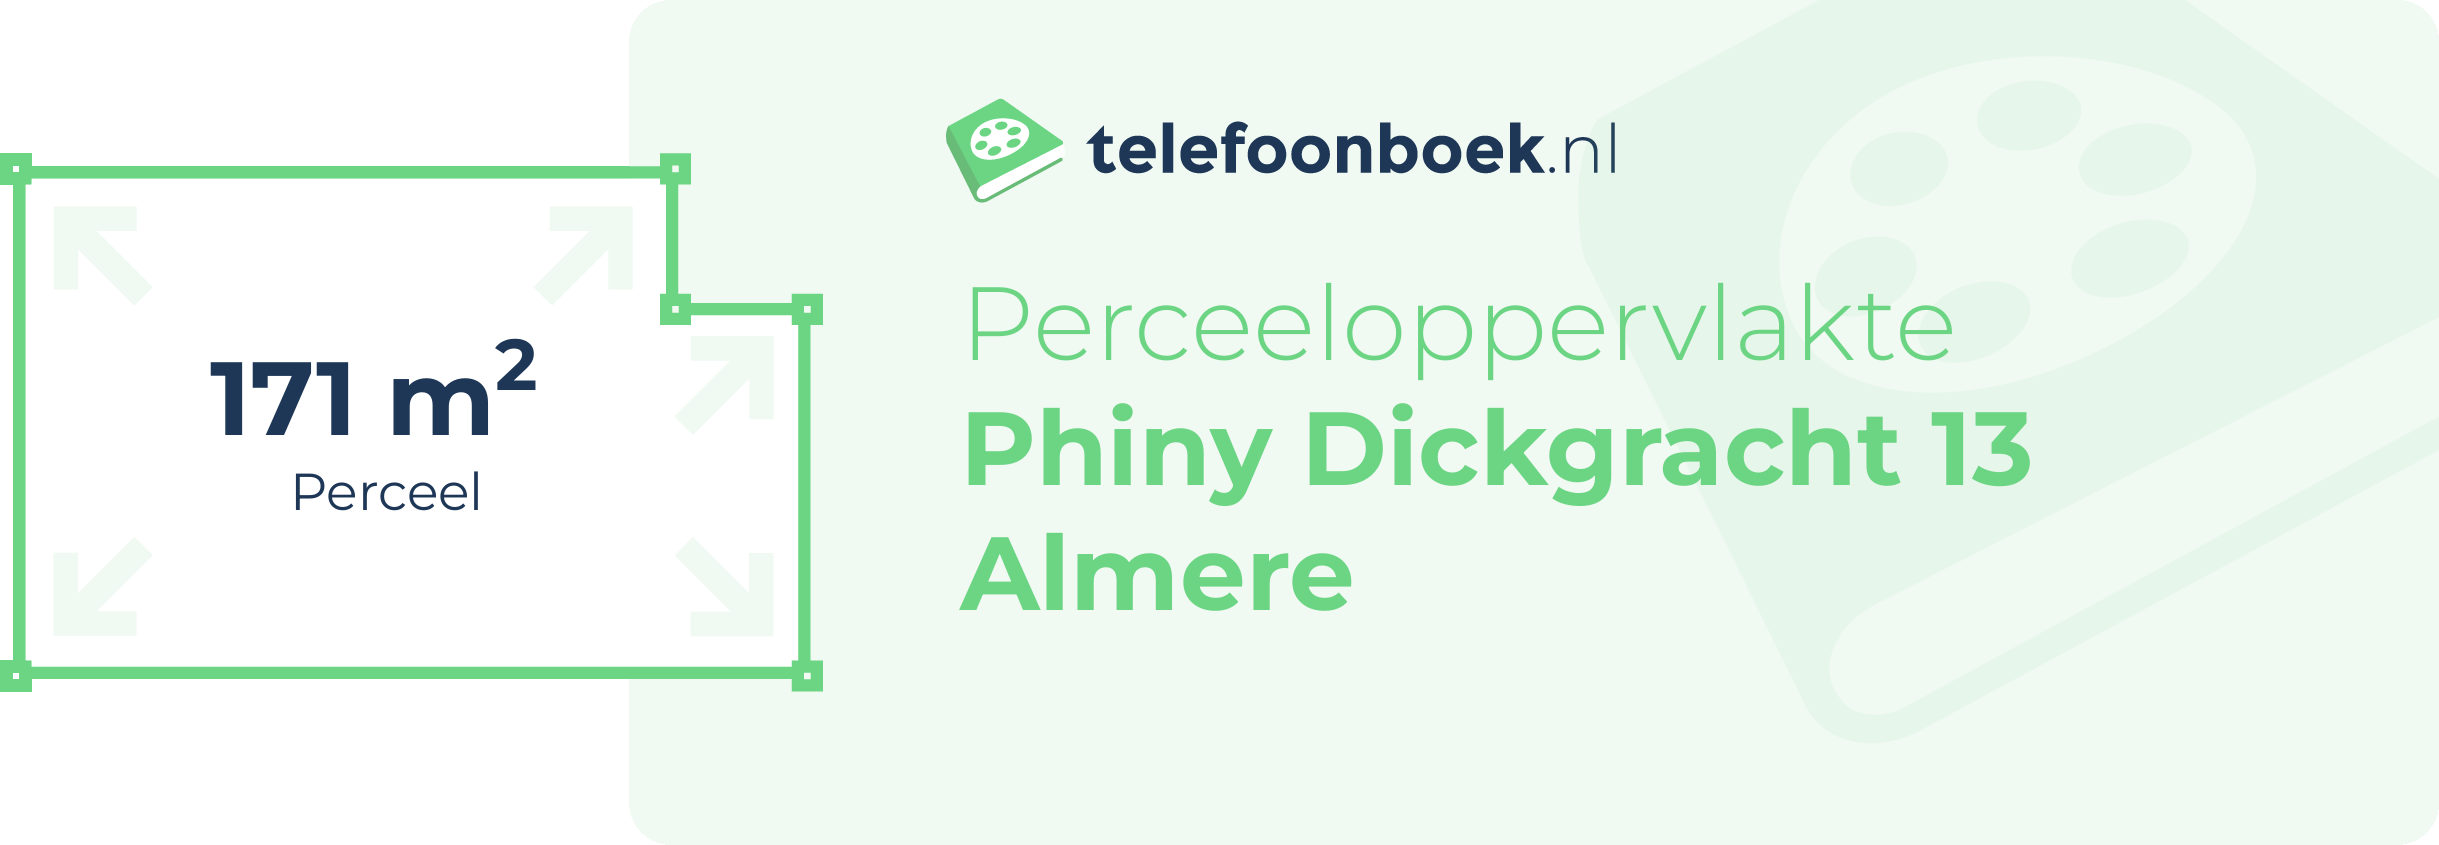 Perceeloppervlakte Phiny Dickgracht 13 Almere